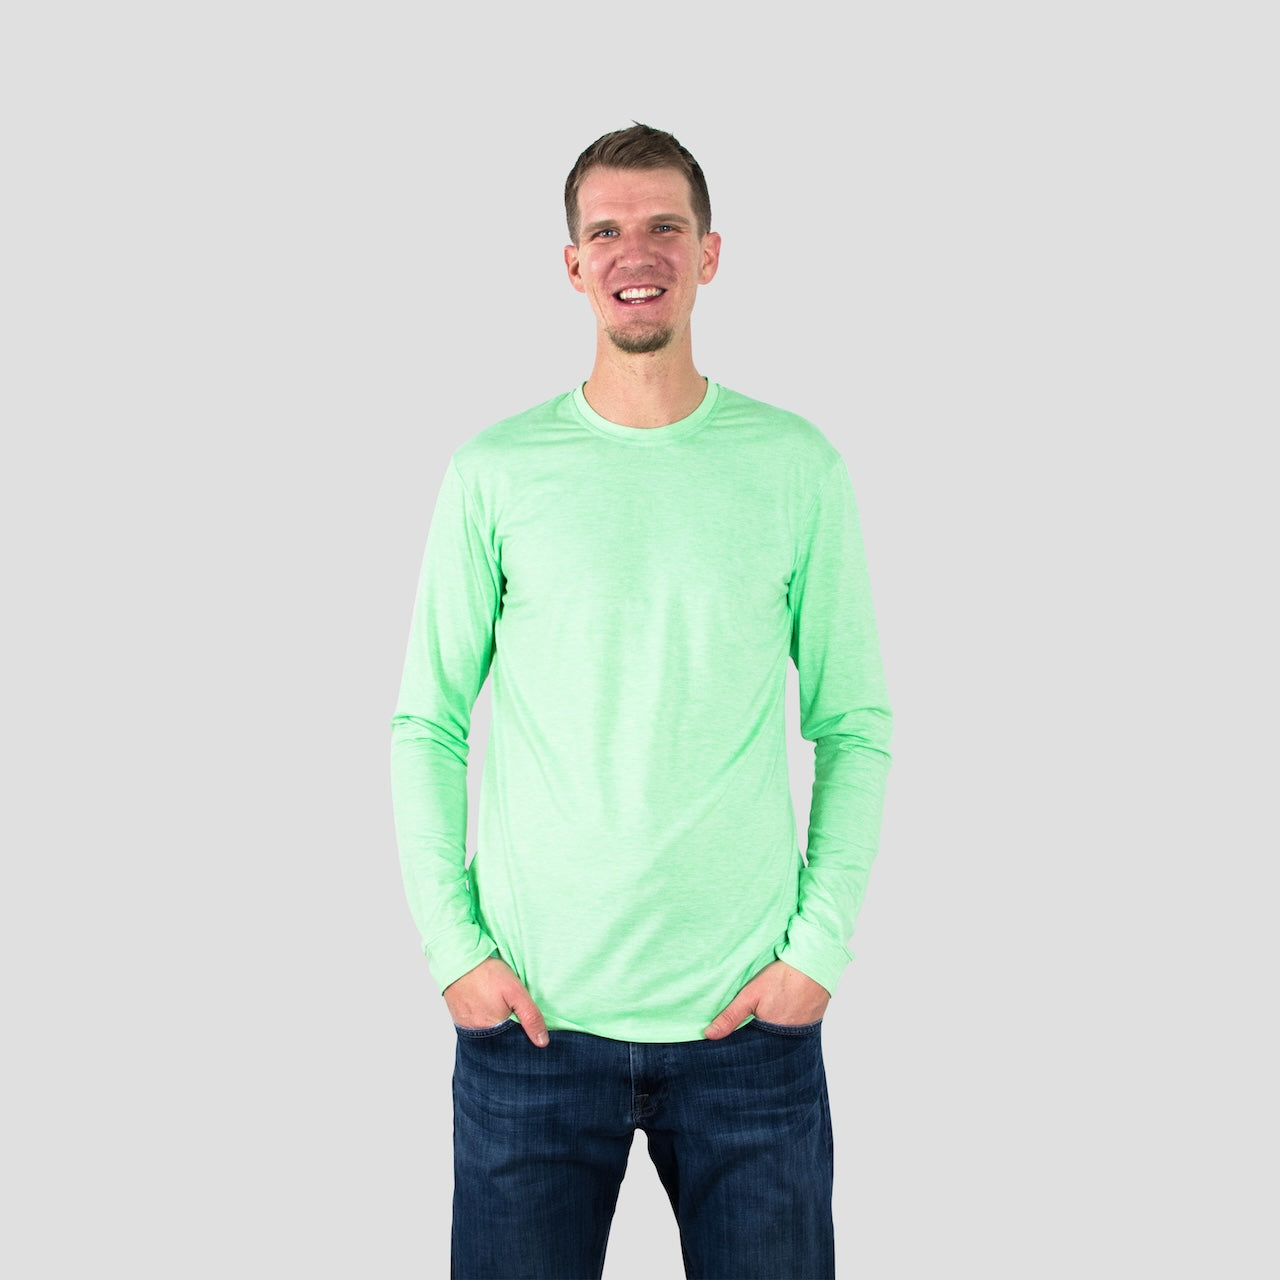 Green Long Sleeve Crew Neck Shirt for Tall Slim Men